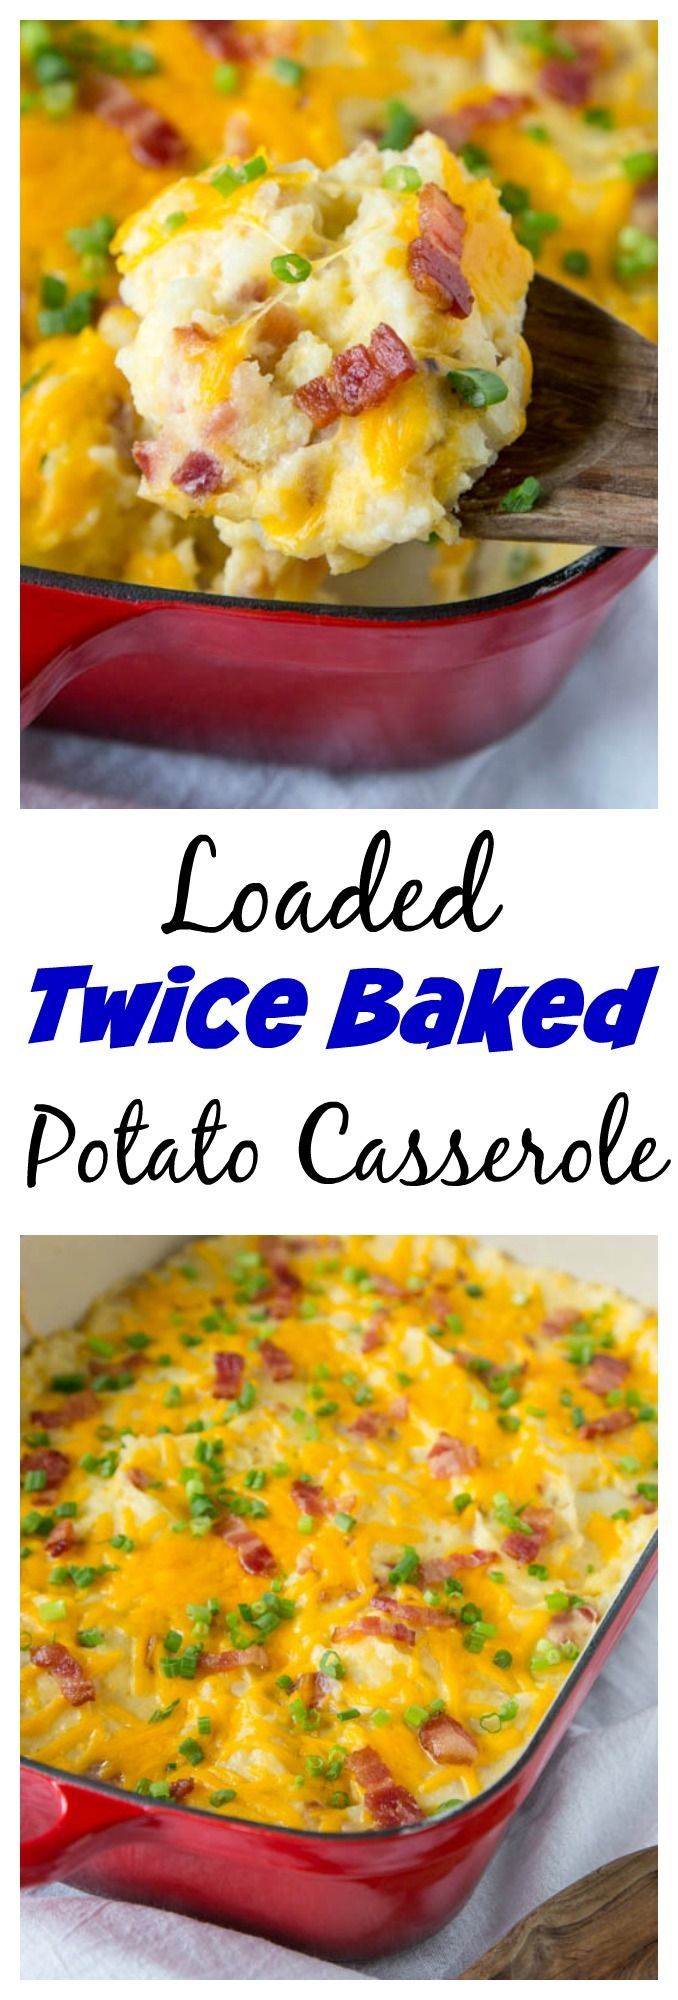 Loaded Twice Baked Potato Casserole – Turn twice baked potatoes into an easy cheesy potato casserole tha